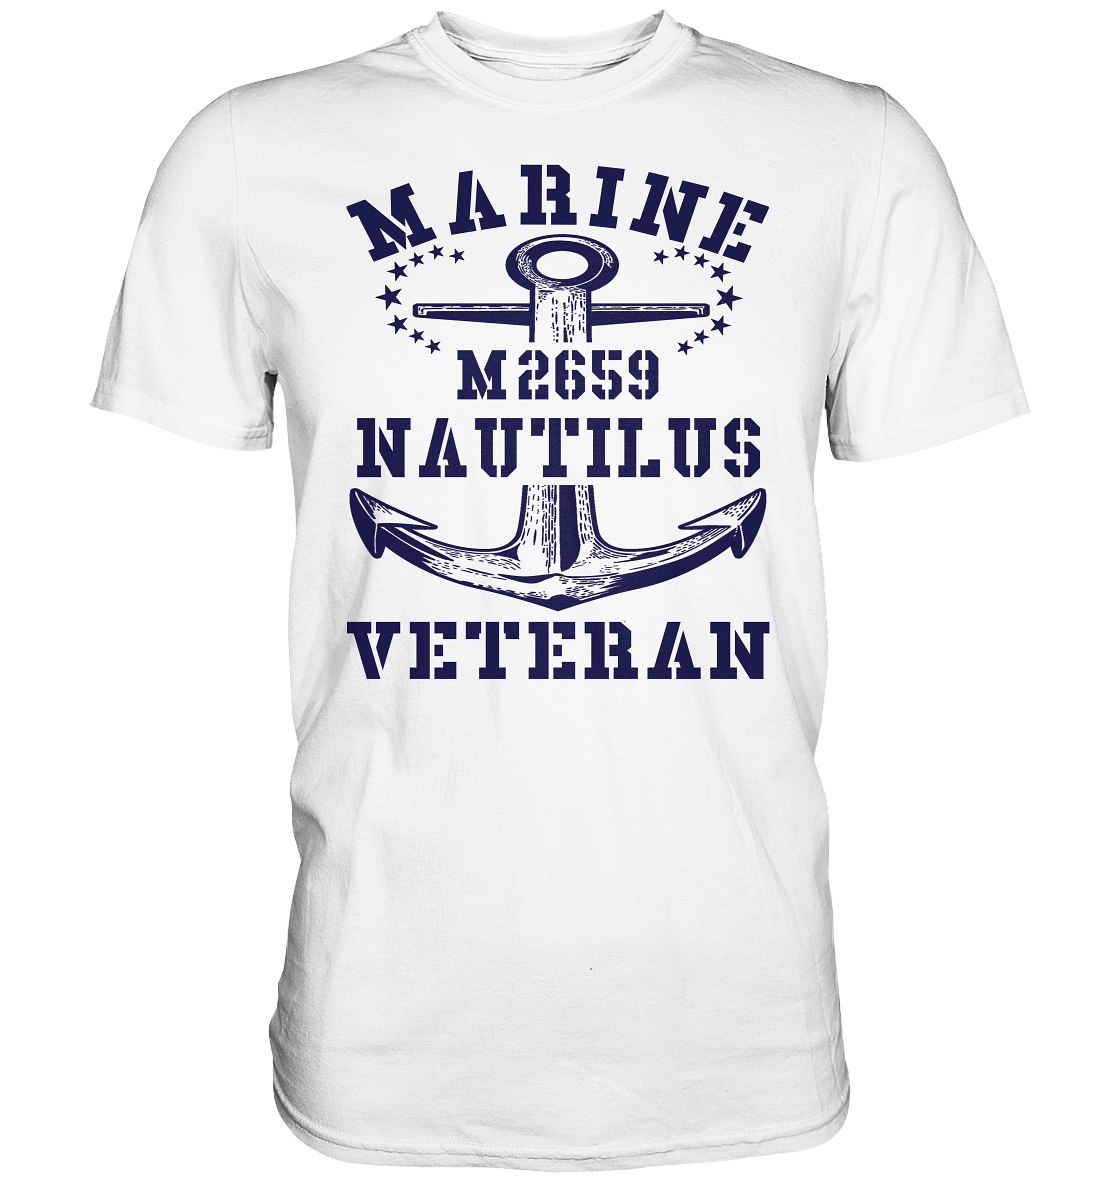 BiMi M2659 NAUTILUS Marine Veteran - Premium Shirt